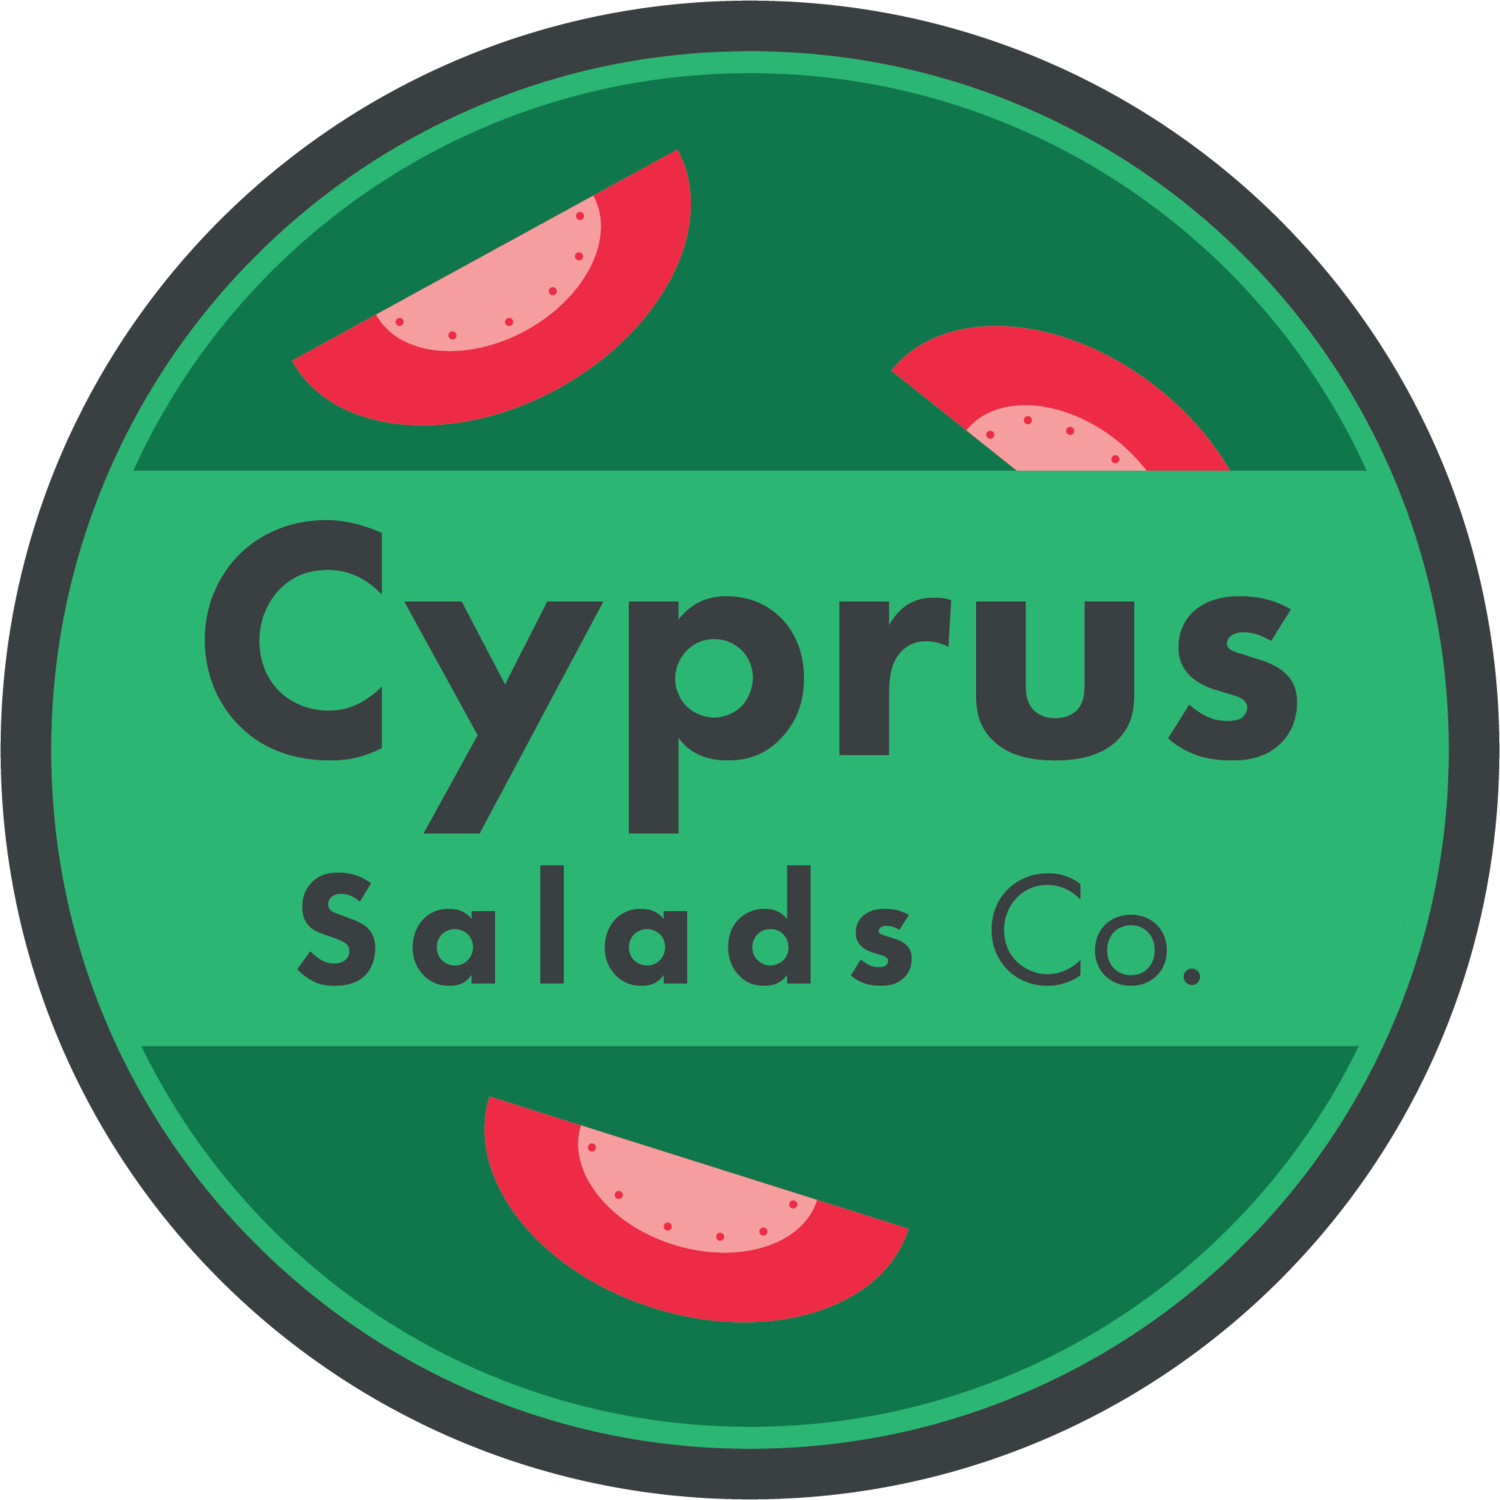 Cyprus Salads Co.